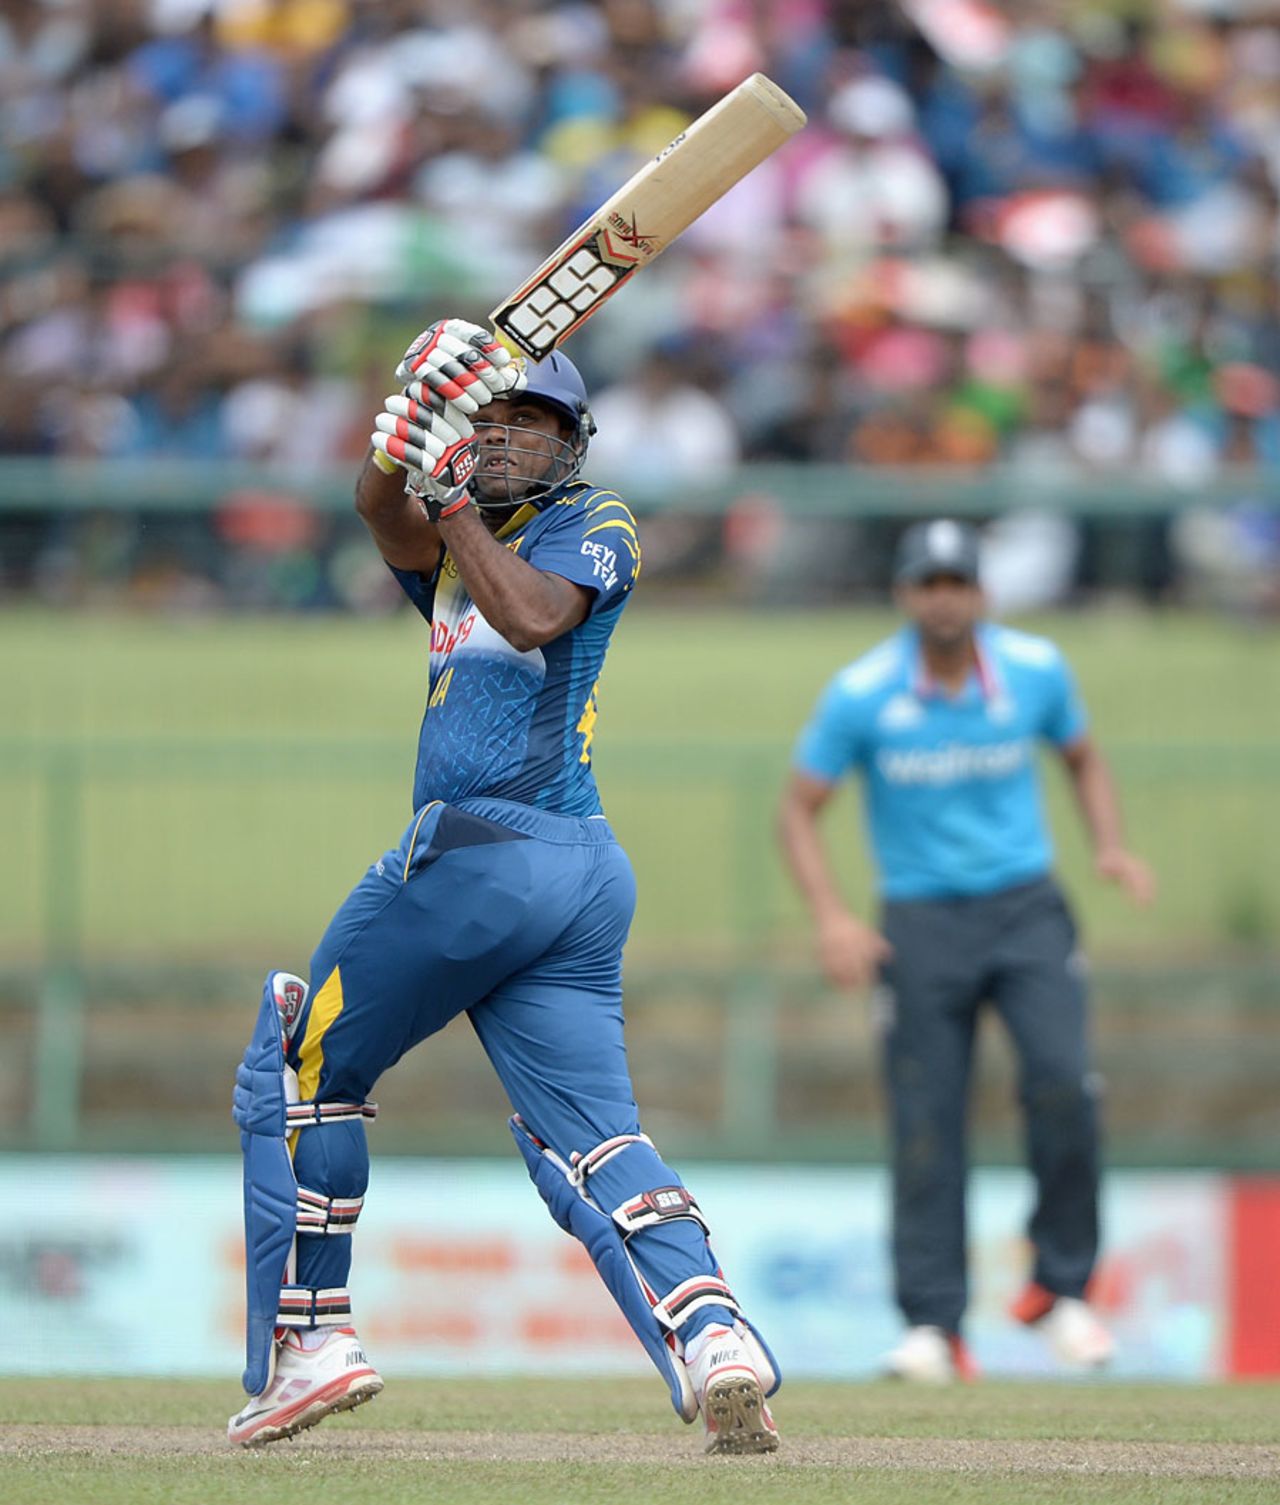 Seekkuge Prasanna hit some powerful blows, Sri Lanka v England, 6th ODI, Pallekele, December 13, 2014